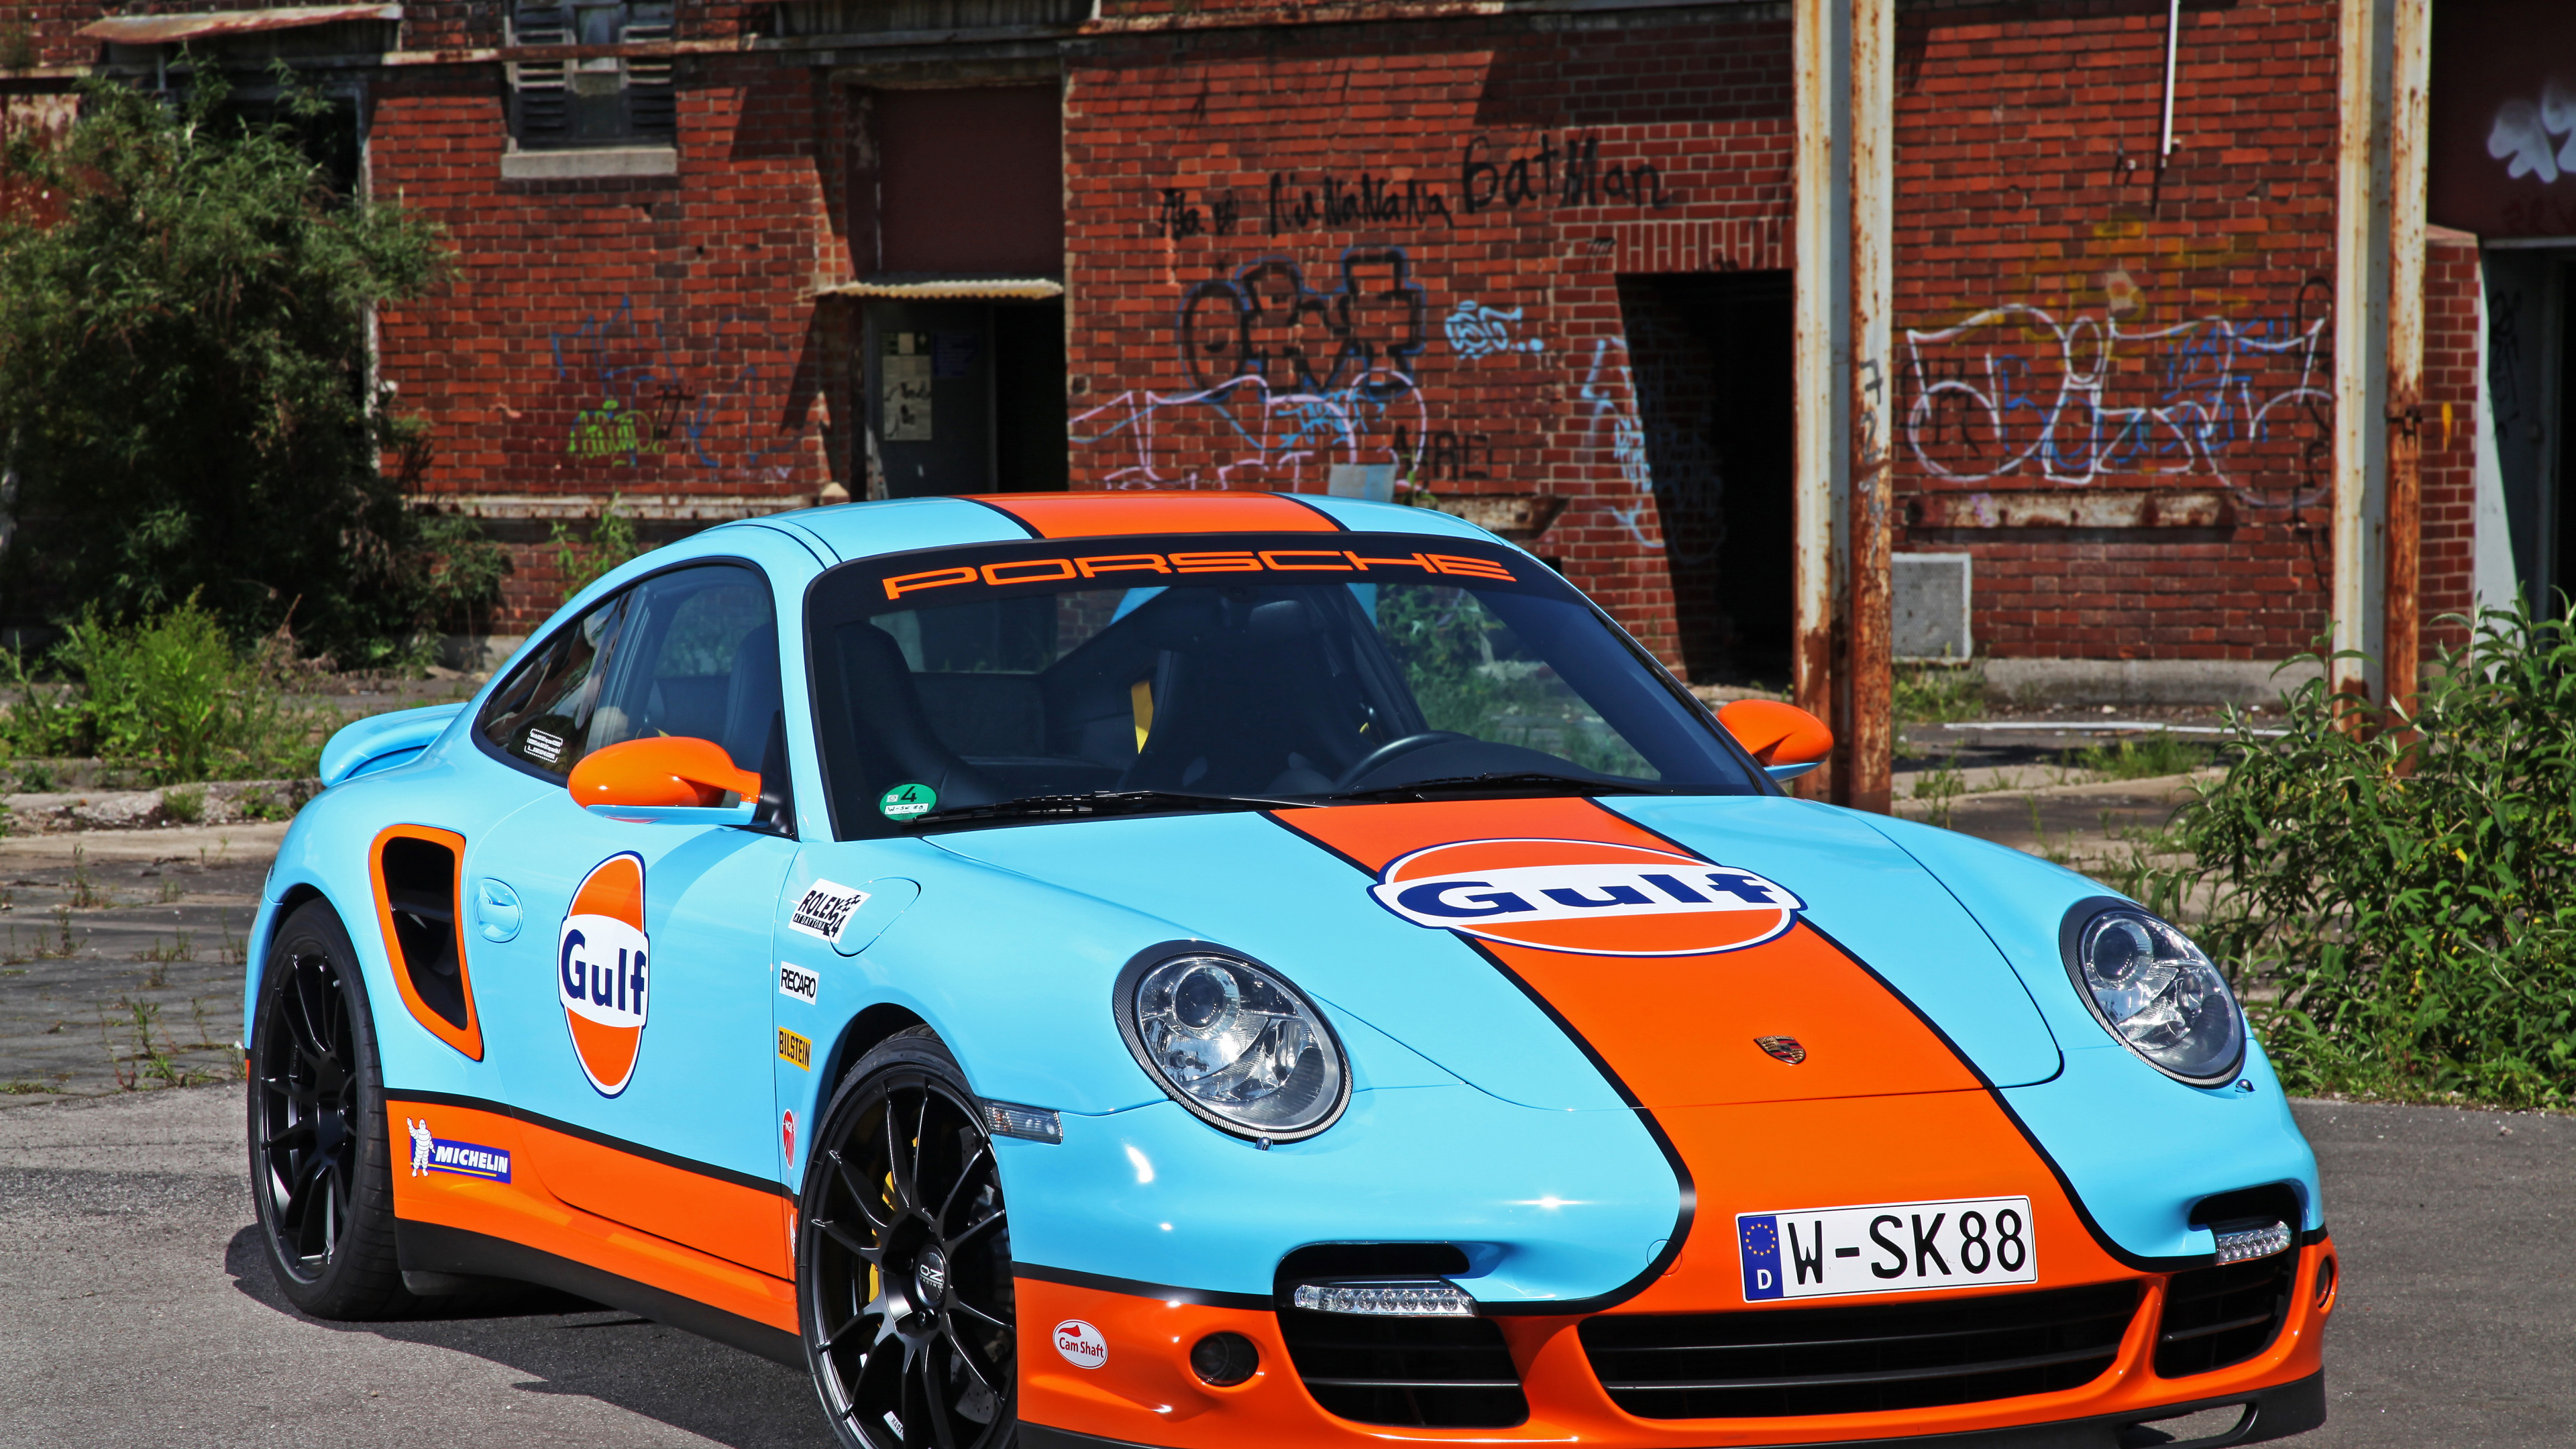 Blue and White Porsche 911 Parked Near Brown Brick Building During Daytime. Wallpaper in 3840x2160 Resolution